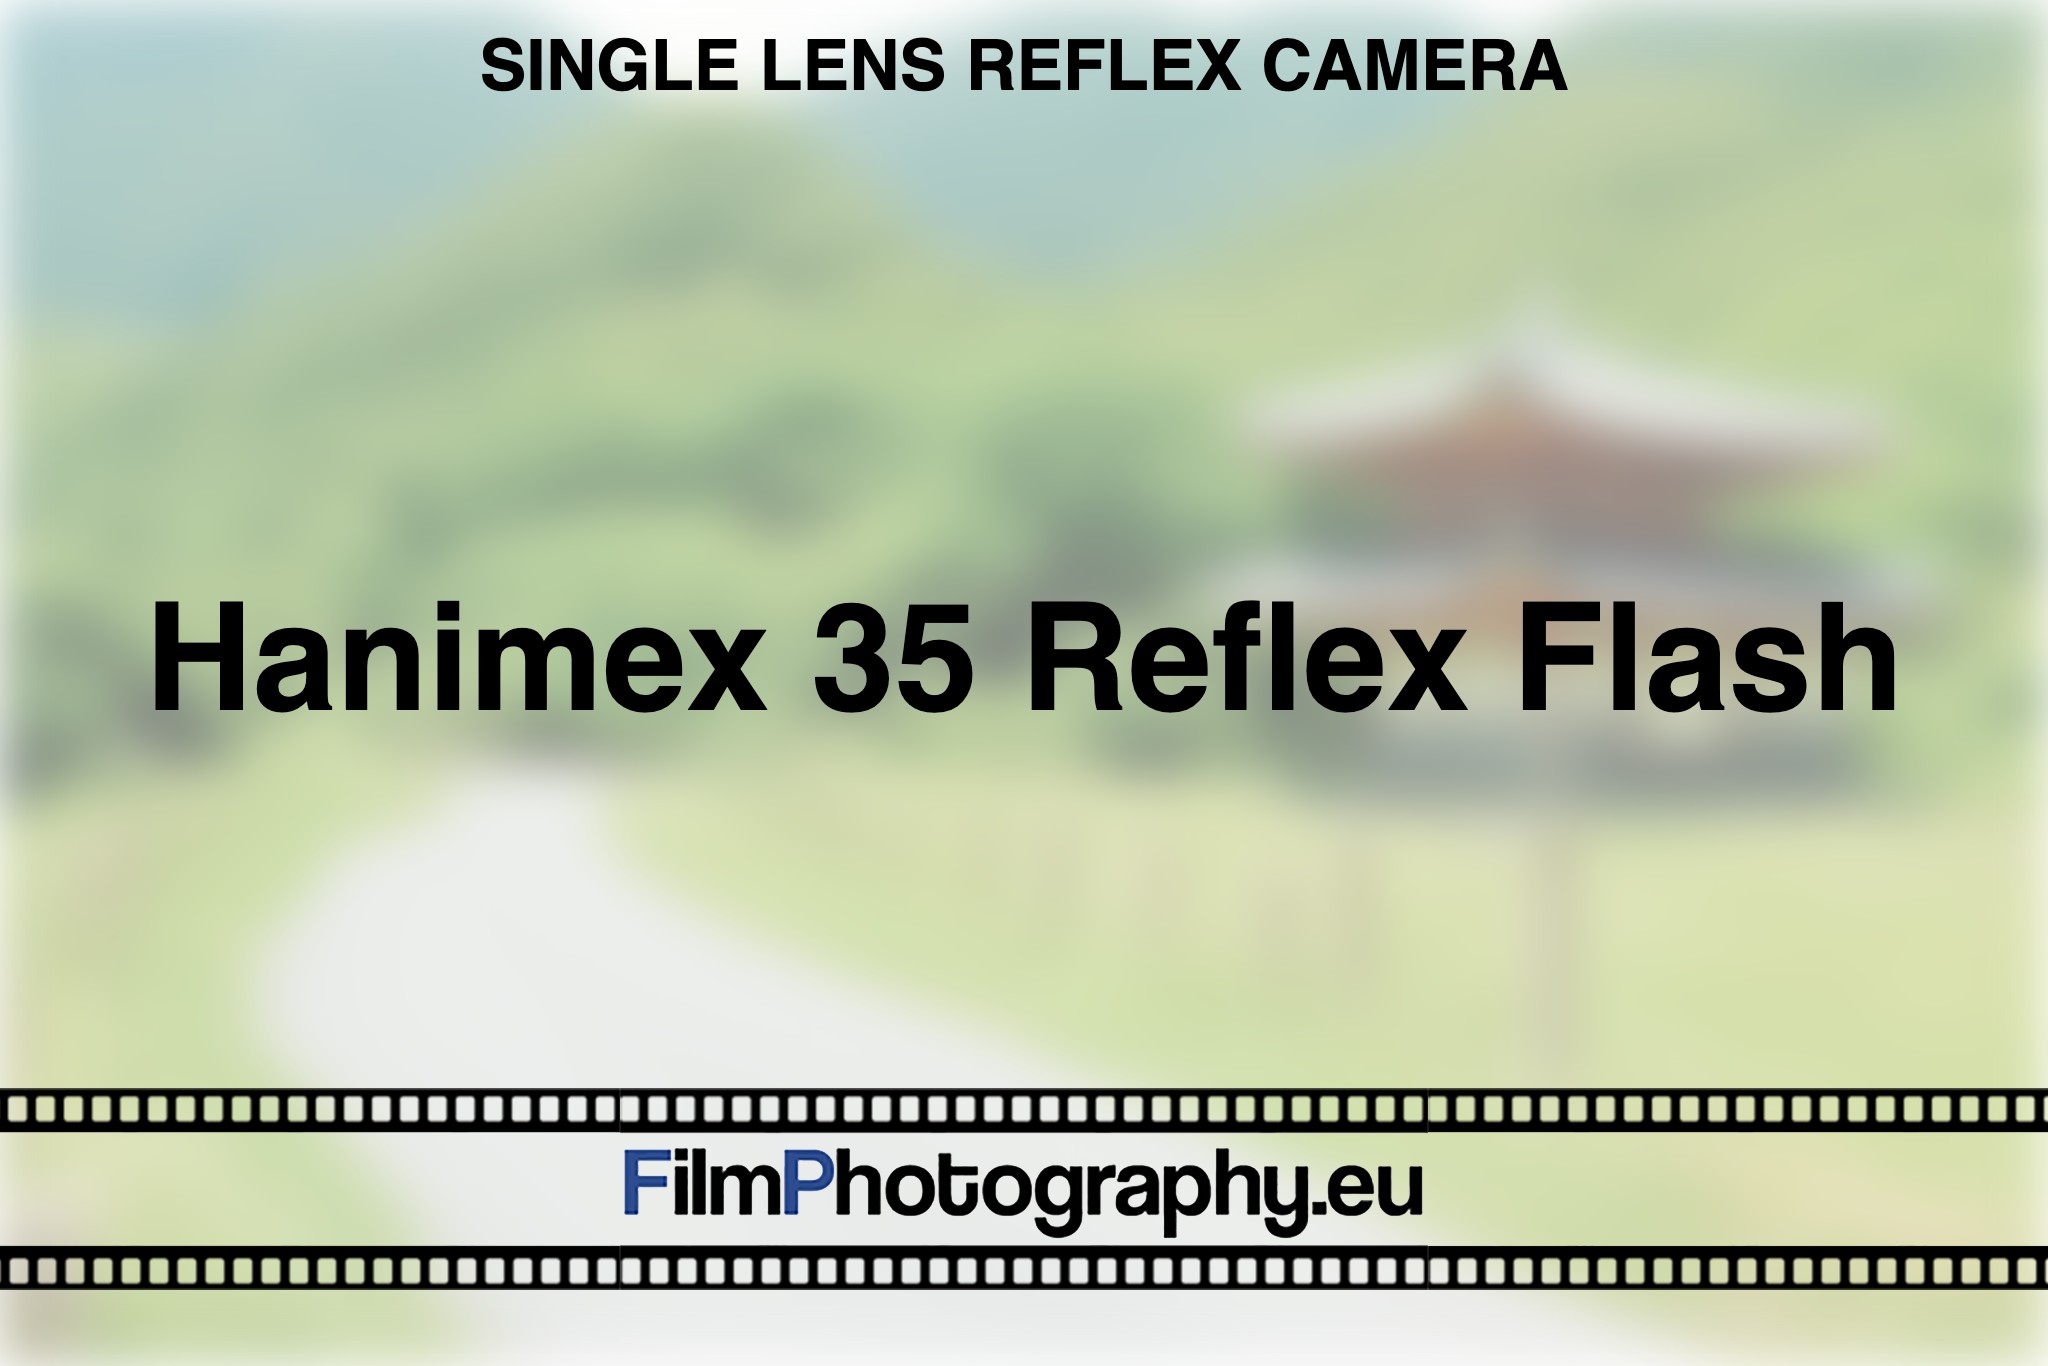 hanimex-35-reflex-flash-single-lens-reflex-camera-bnv